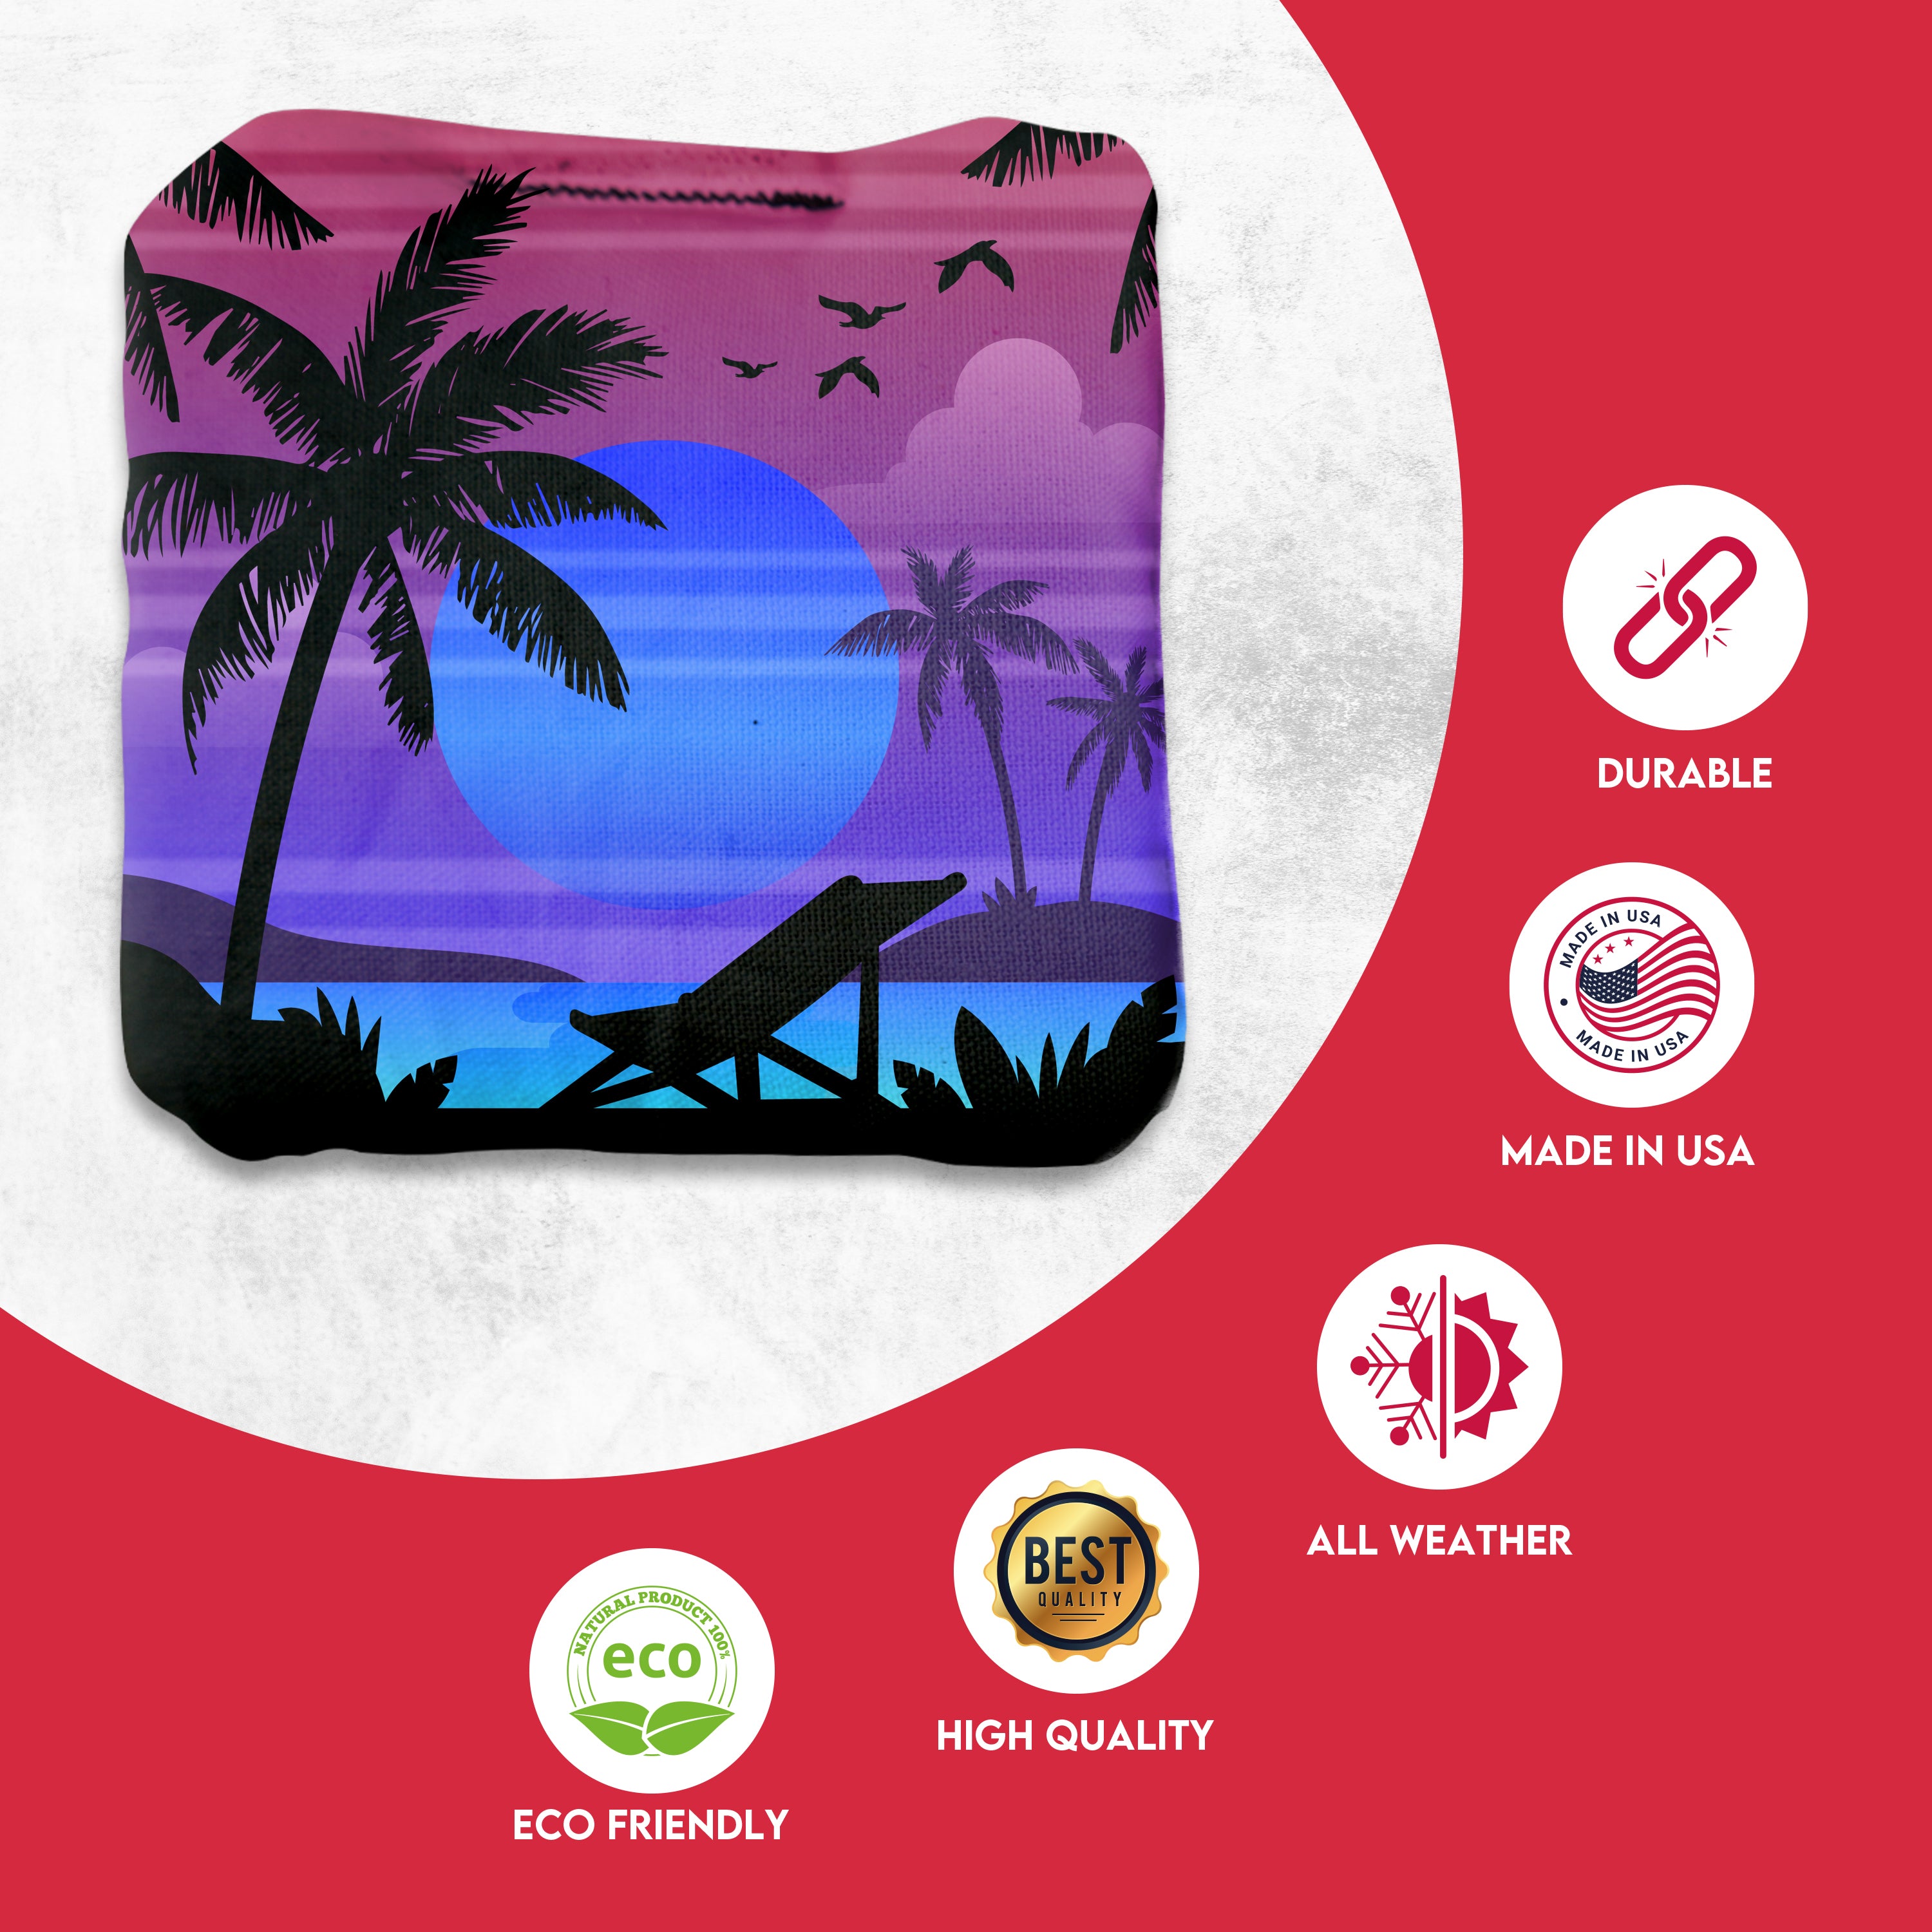 Colorful Beach Cornhole Bags - Set of 8